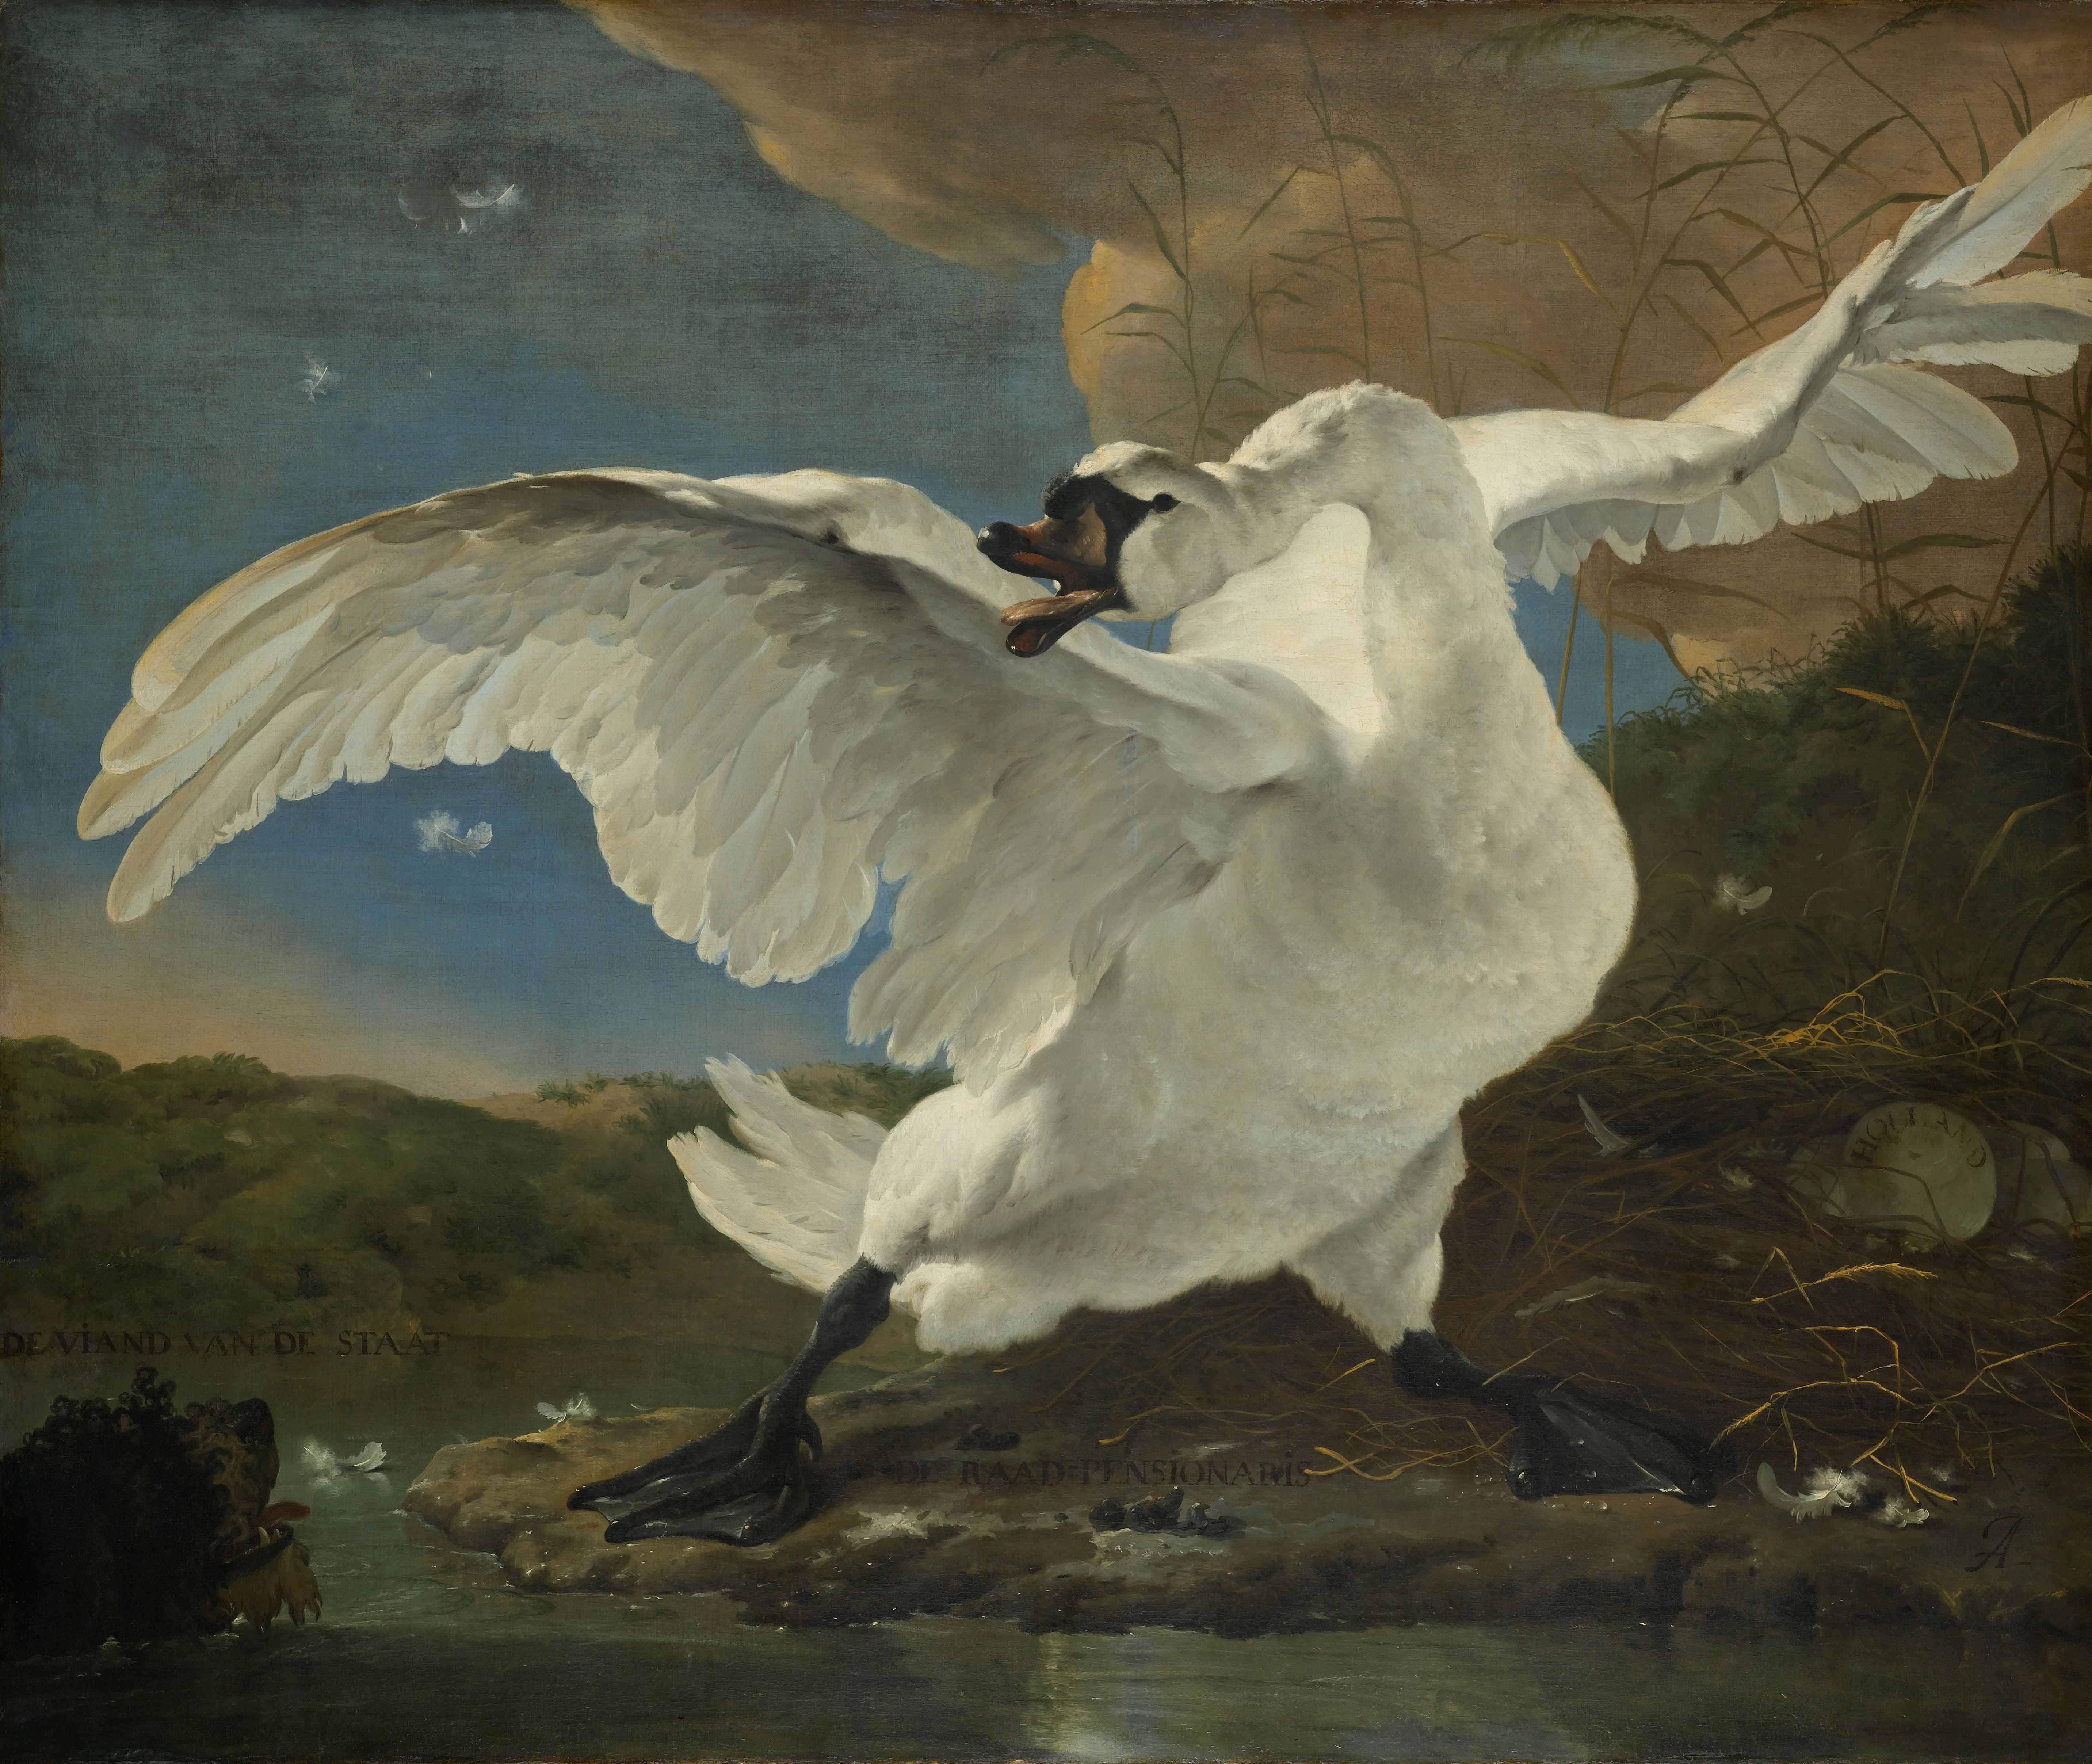 Threatened Swan by Jan Asselijn - c. 1650 - 144 x 171 cm Rijksmuseum